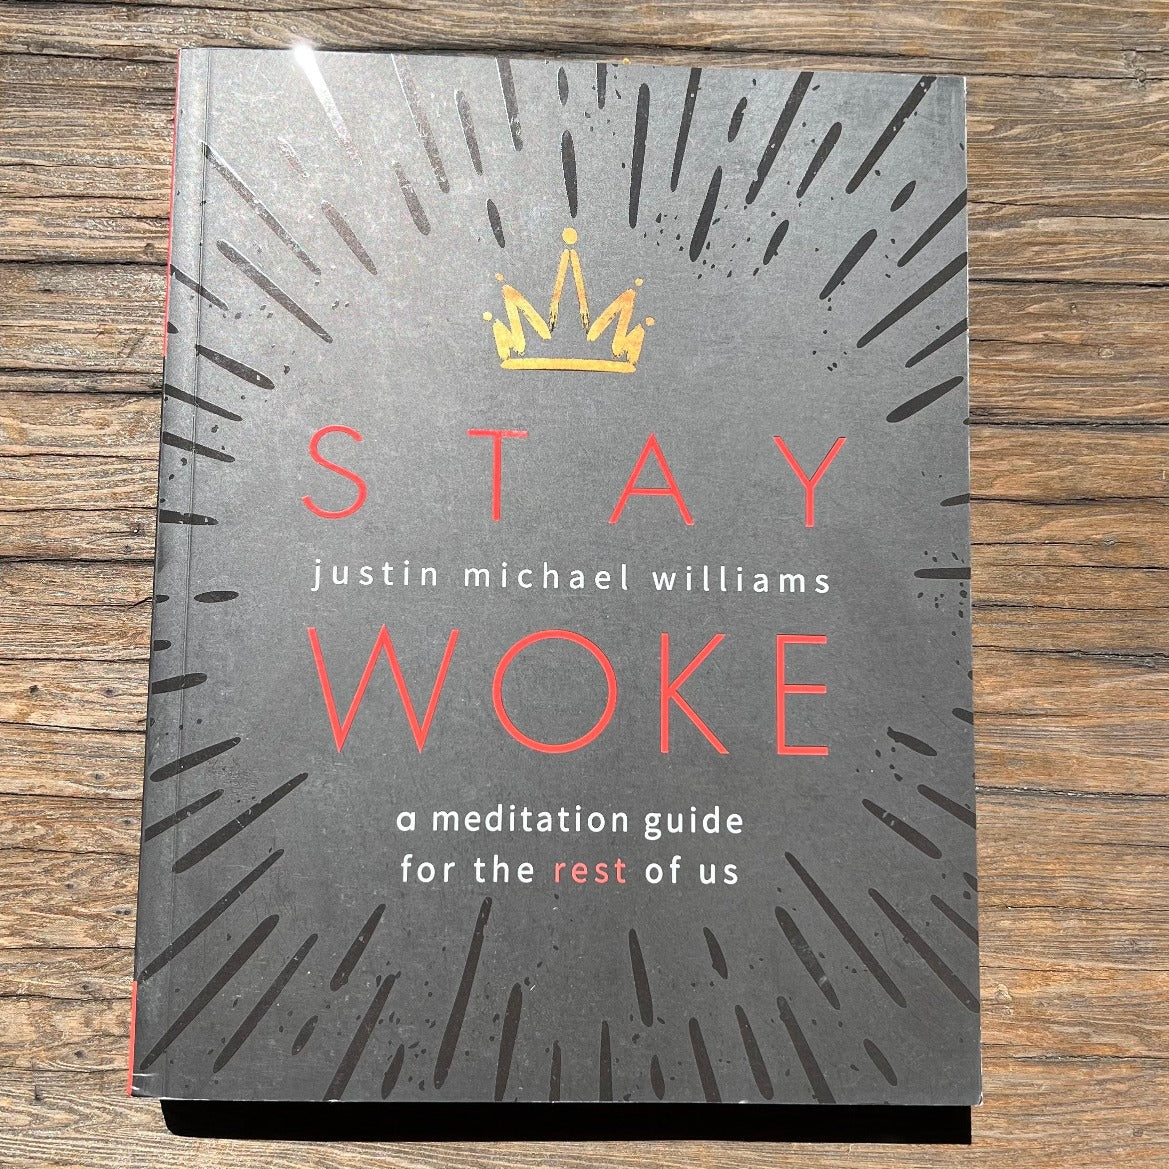 Stay Woke by Justin Michael Williams